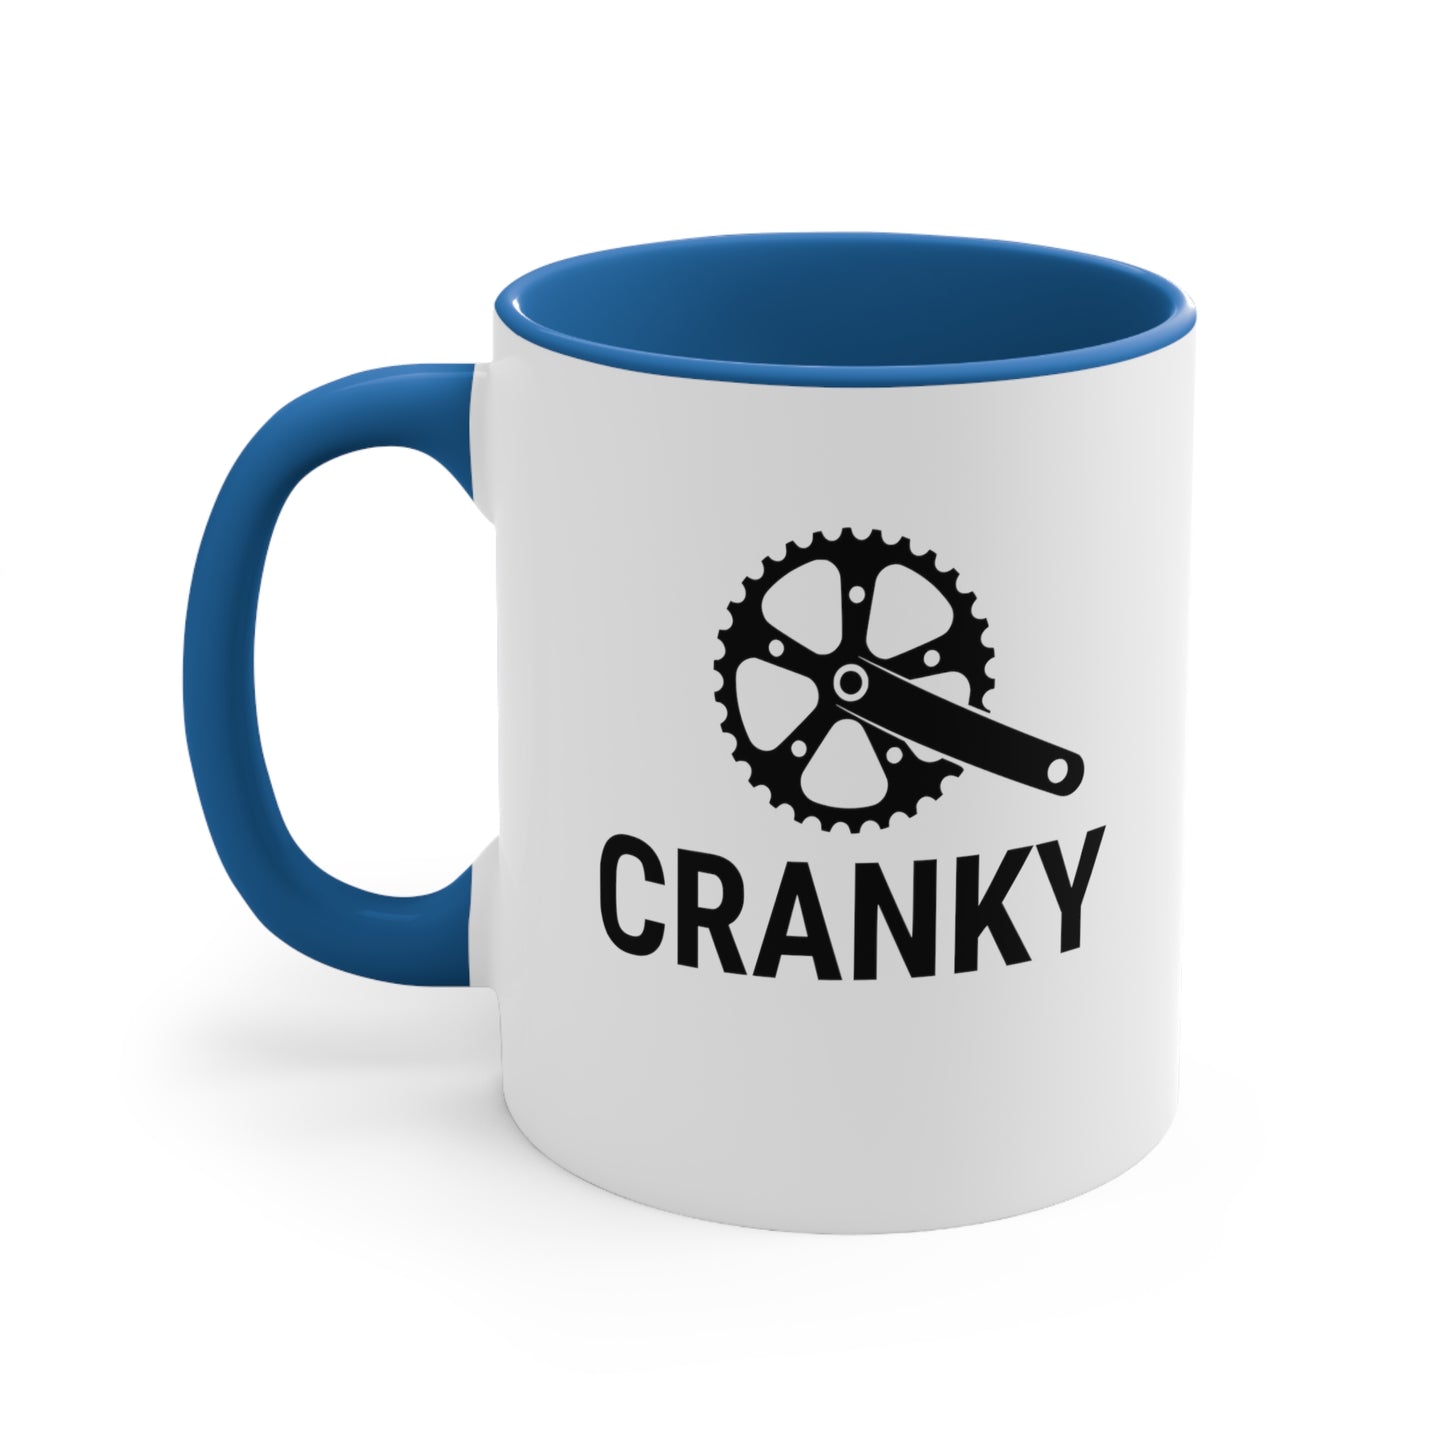 Cranky - Taza de bicicleta